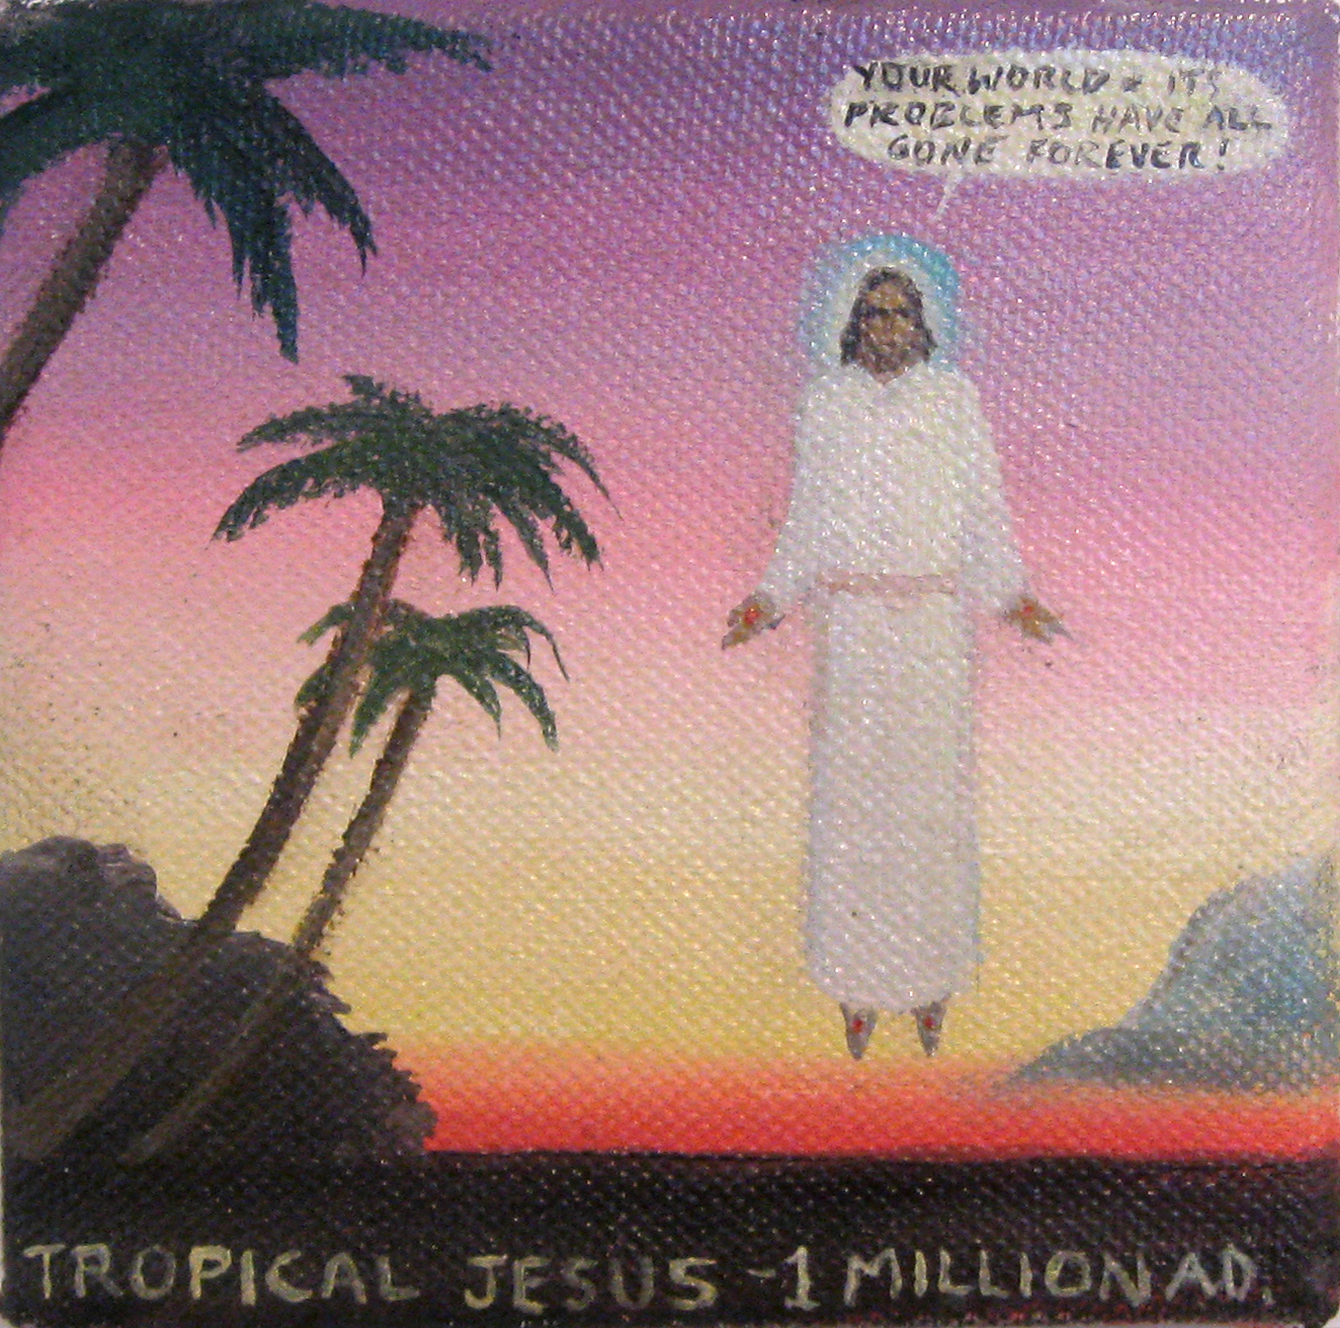 TROPICAL JESUS